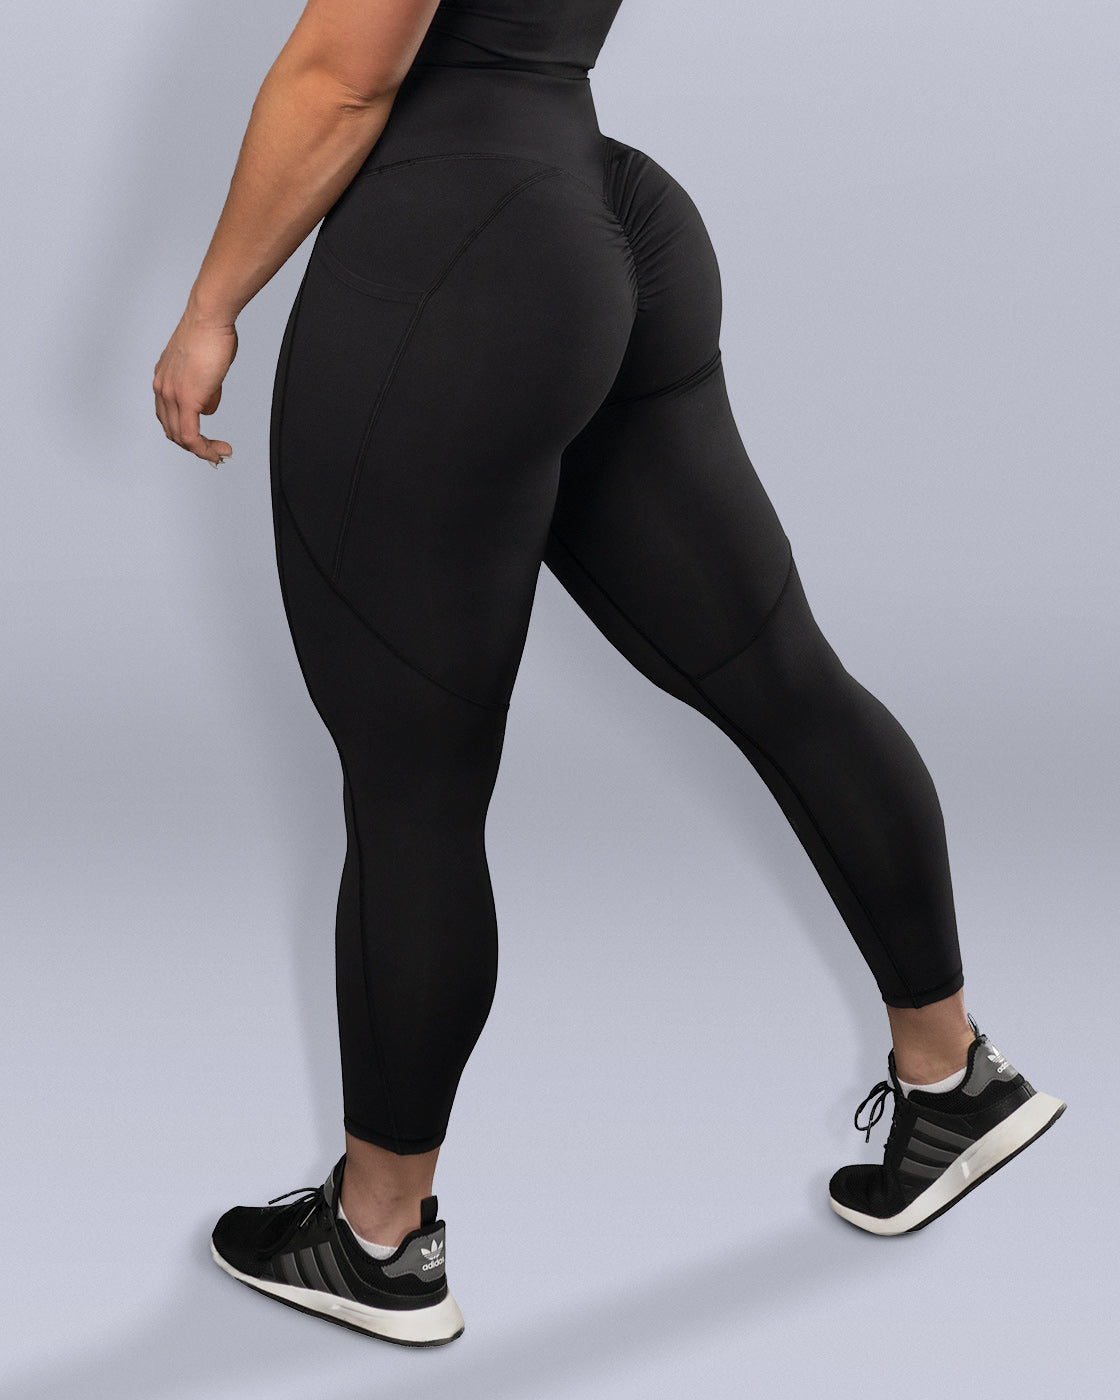 Women Scrunch Leggings Booty Lifting Workout Yoga Pants Anti Cellulite  Textured | eBay